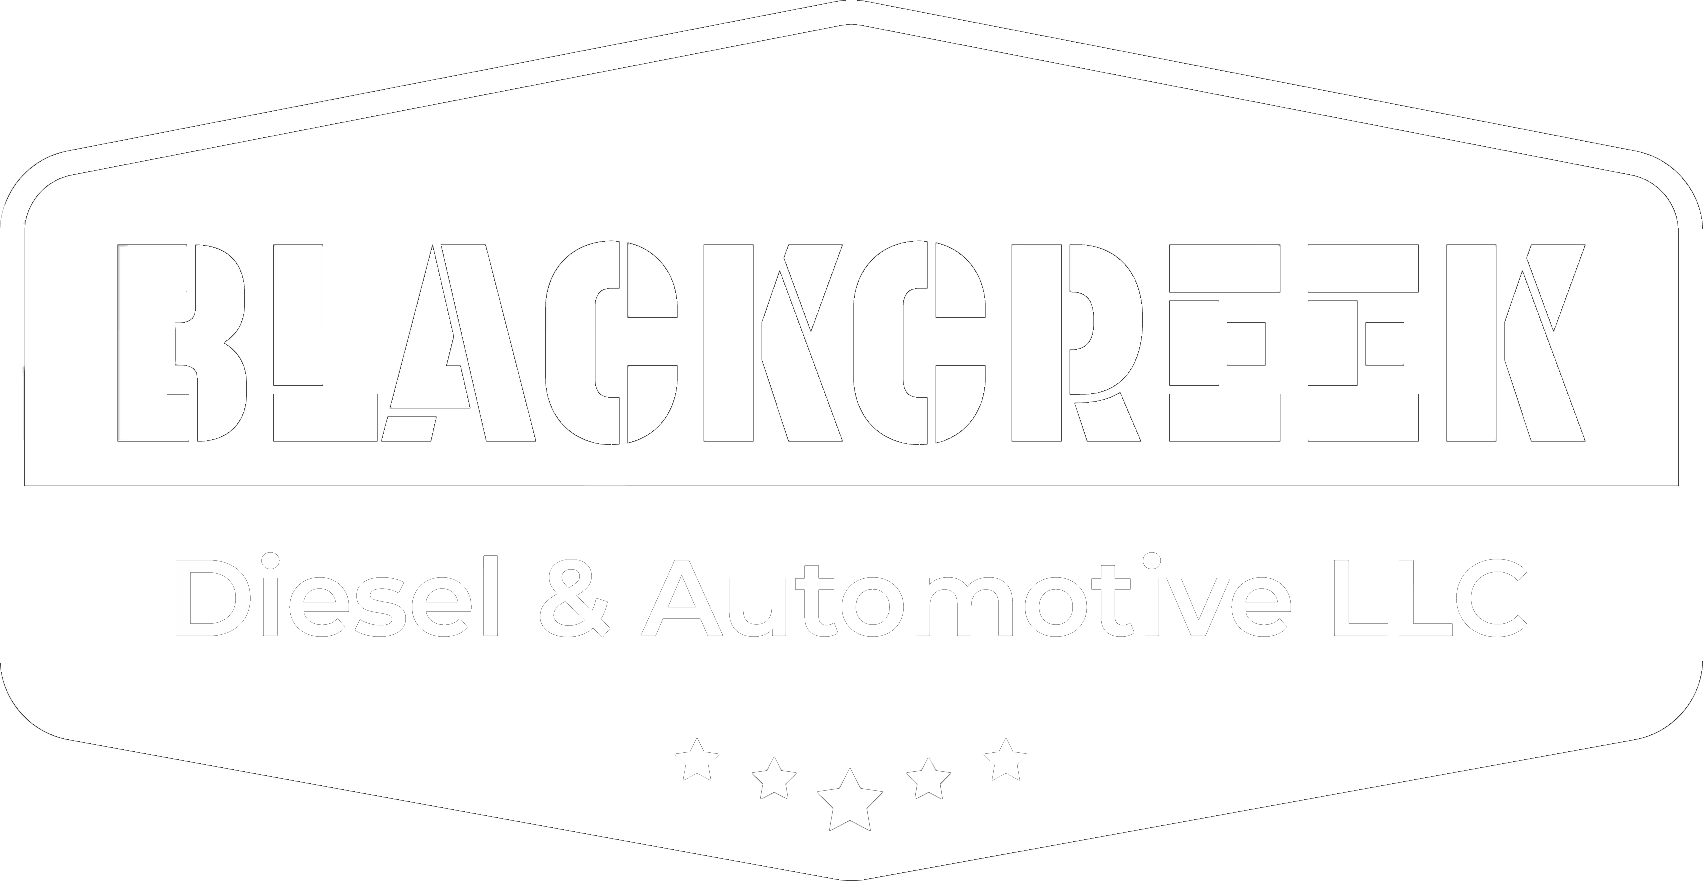 Blackcreek Diesel & Automotive in Emporia, KS